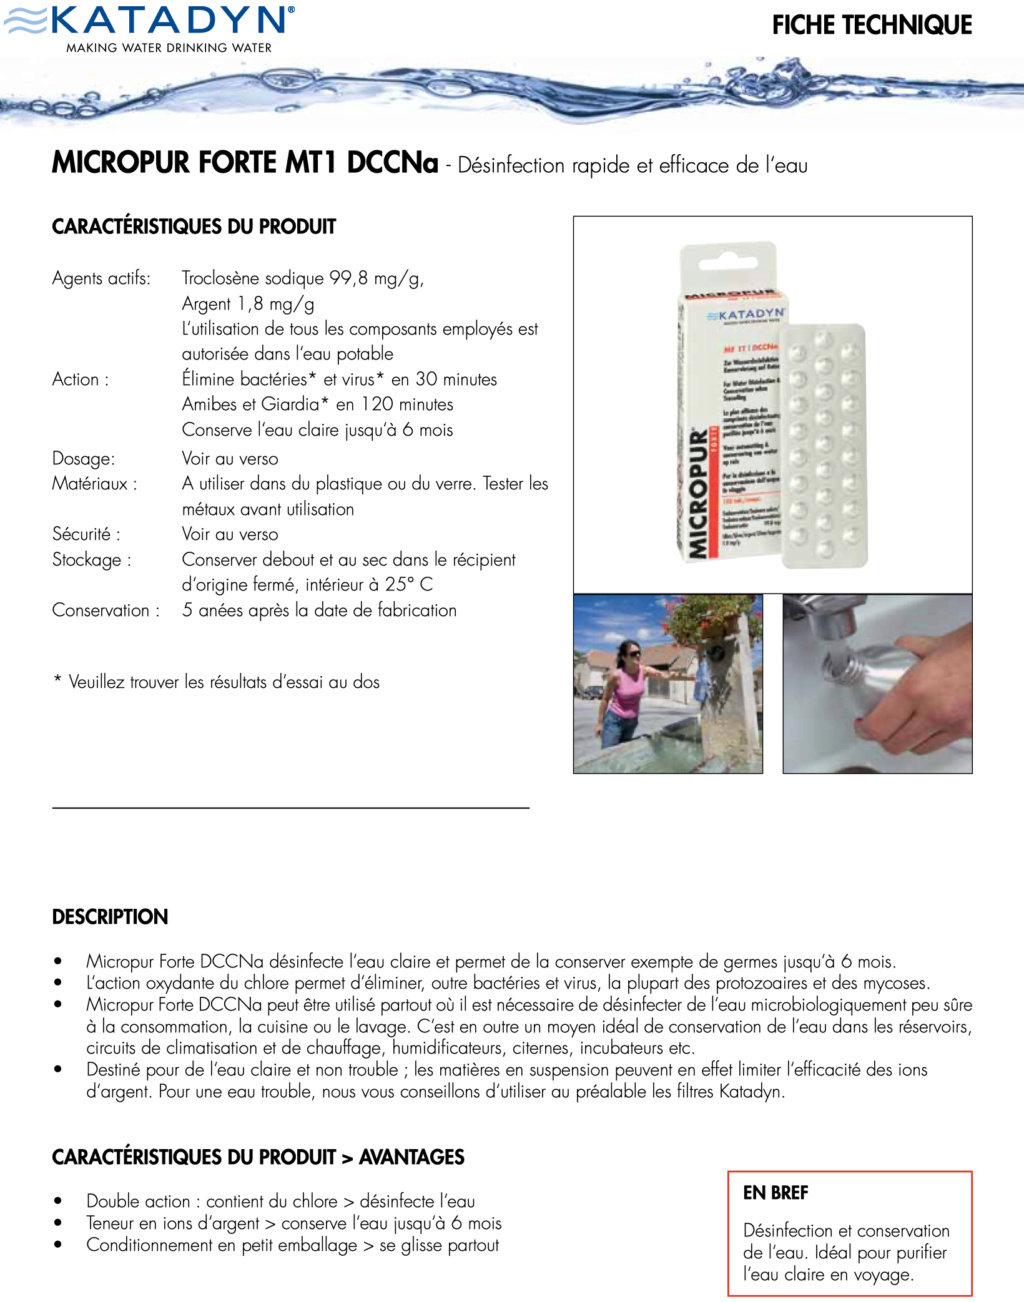 MICROPUR: Lisez la notice! - Page 2 Microp13